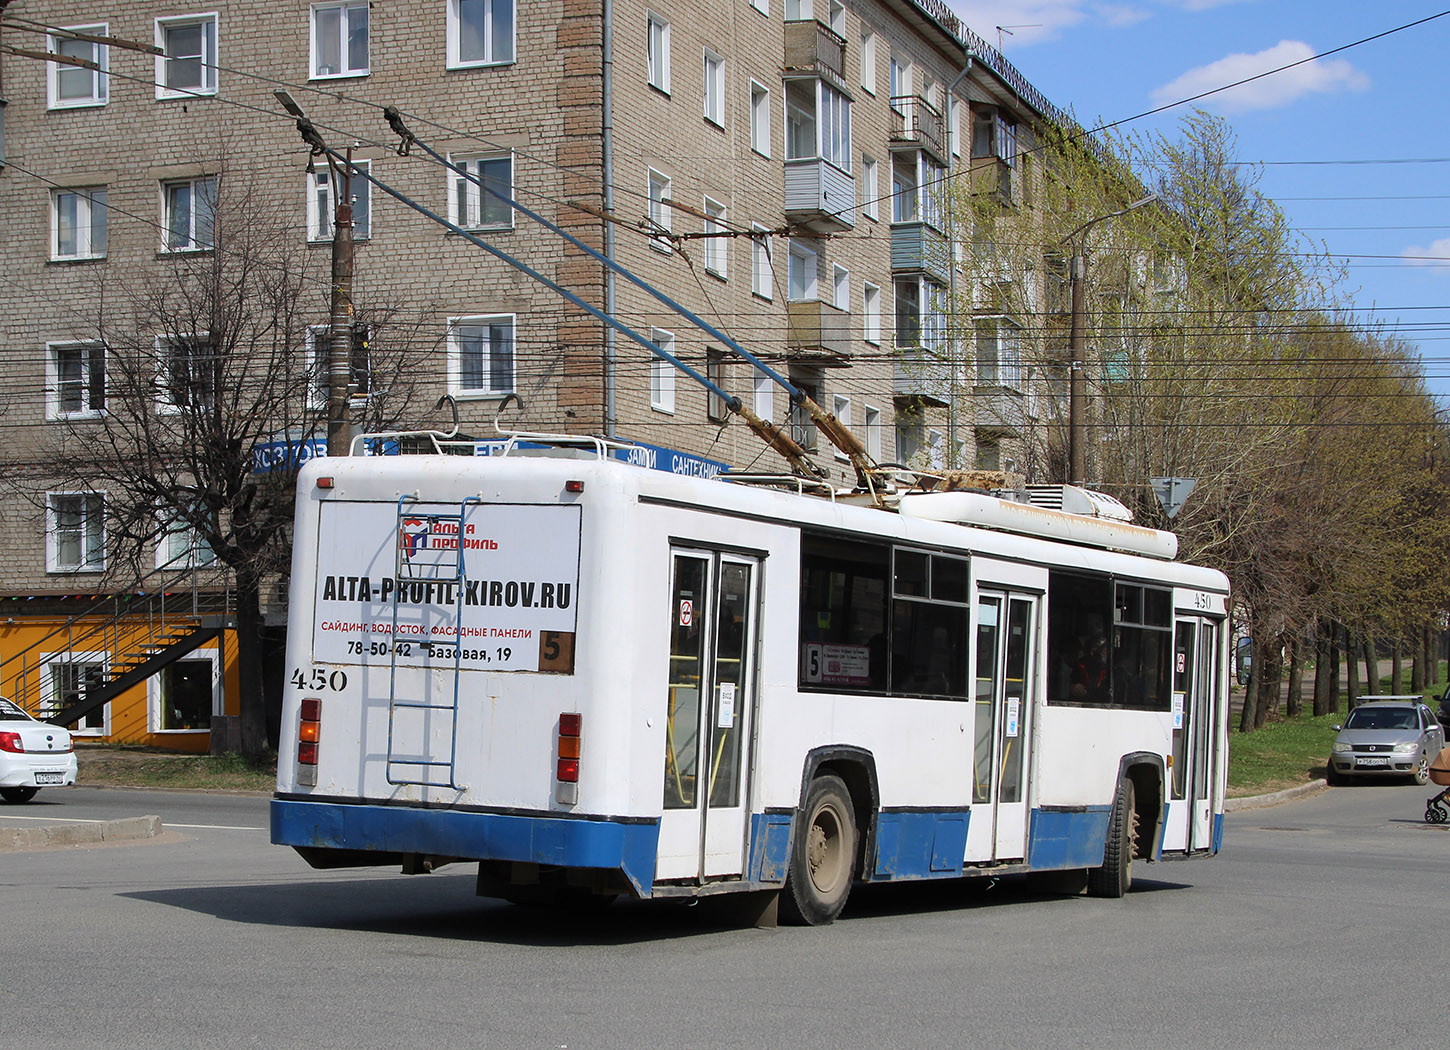 Kirov, BTZ-52764R N°. 450